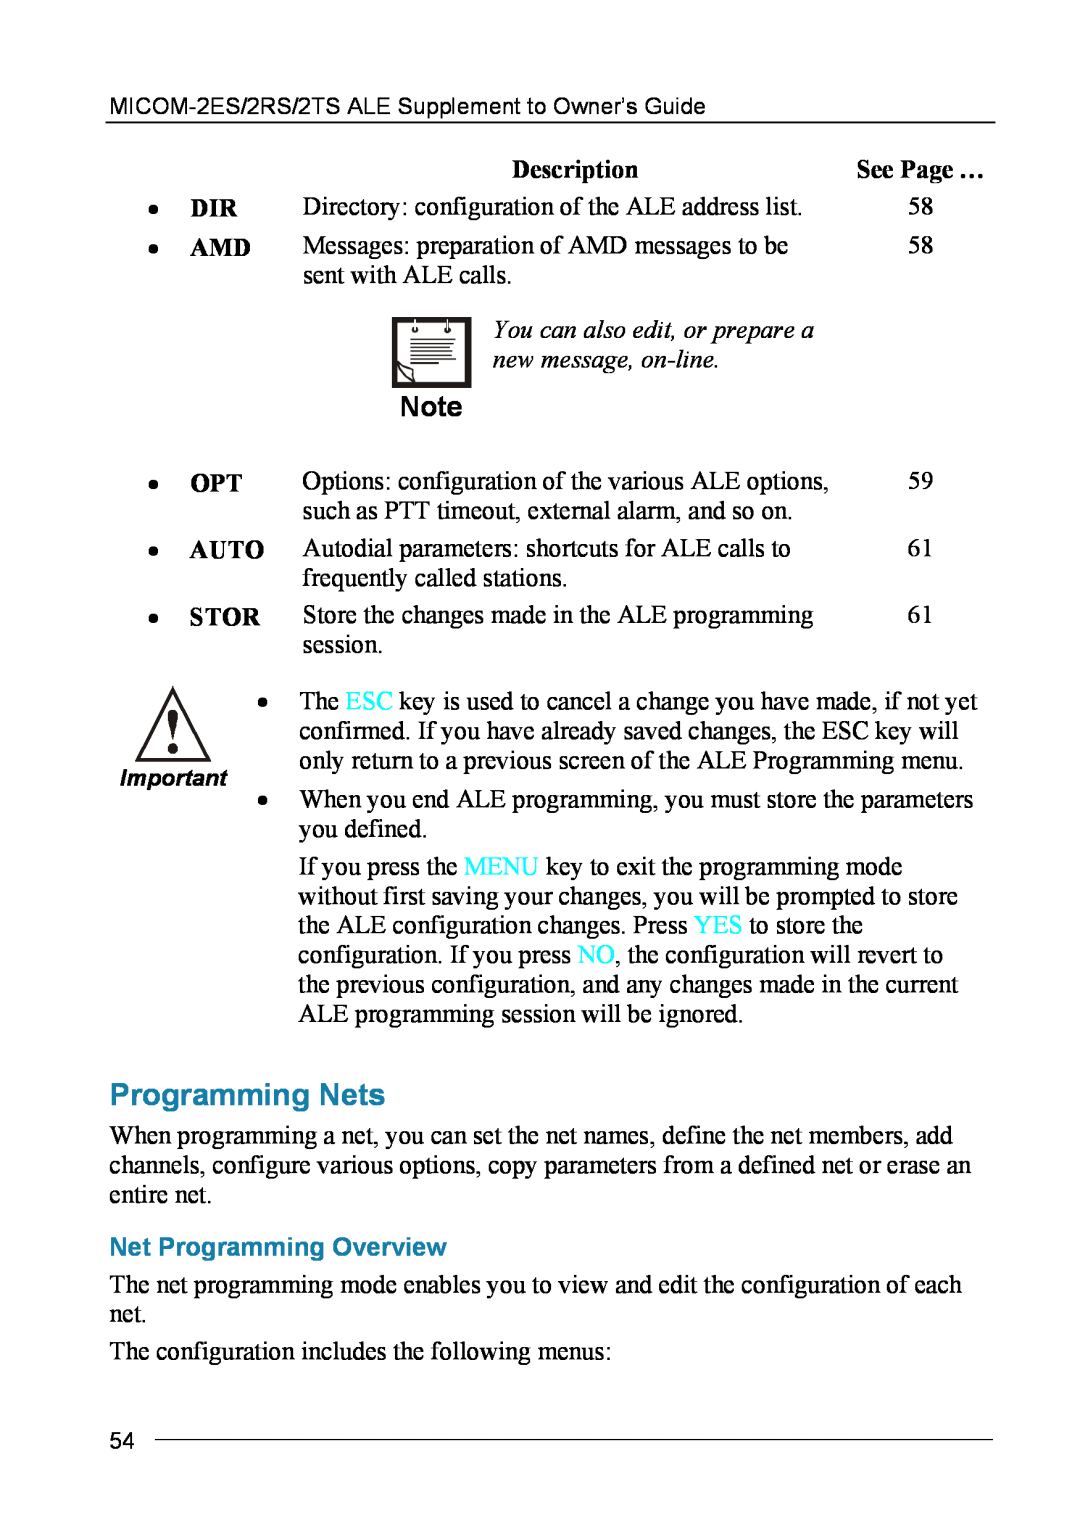 Motorola MICOM-2ES/2RS/2TS ALE Programming Nets, Net Programming Overview, Dir Amd, Description, See Page …, Opt Auto Stor 